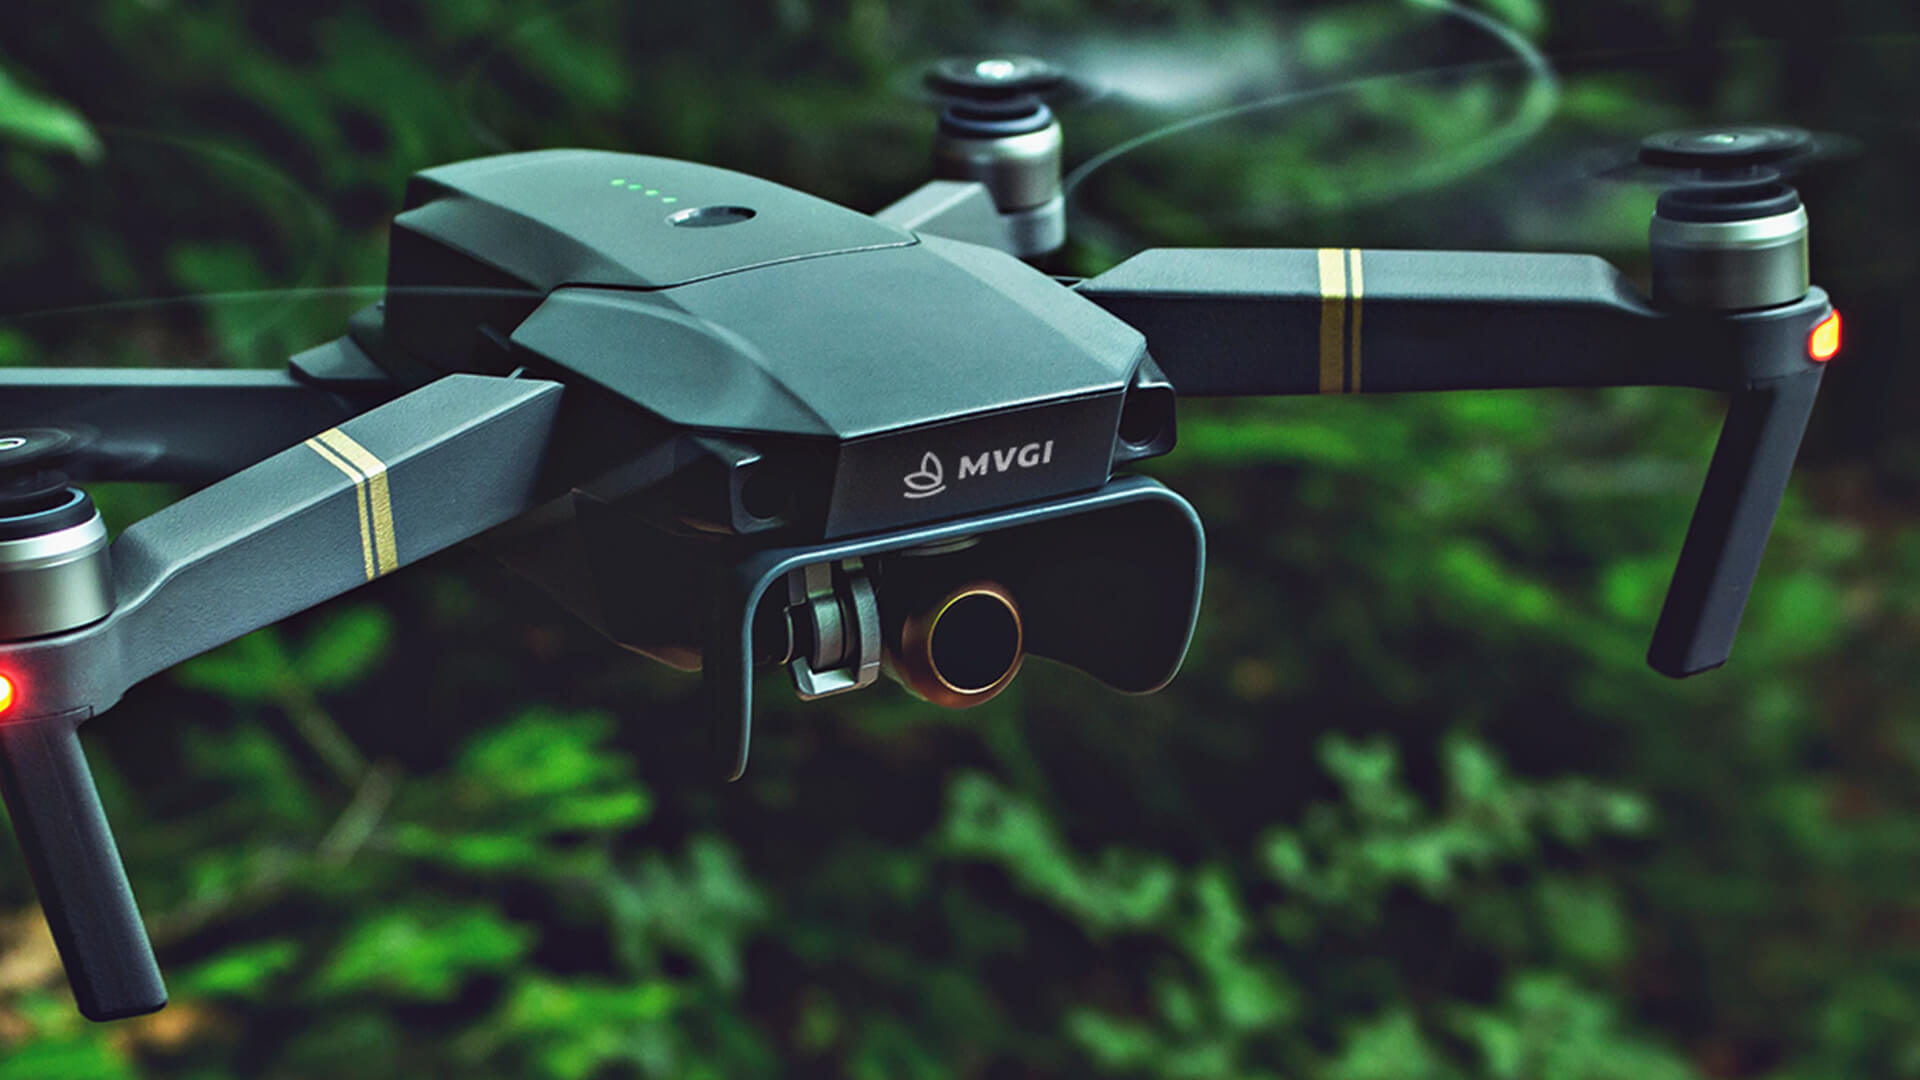 drone preto com logo mvgi